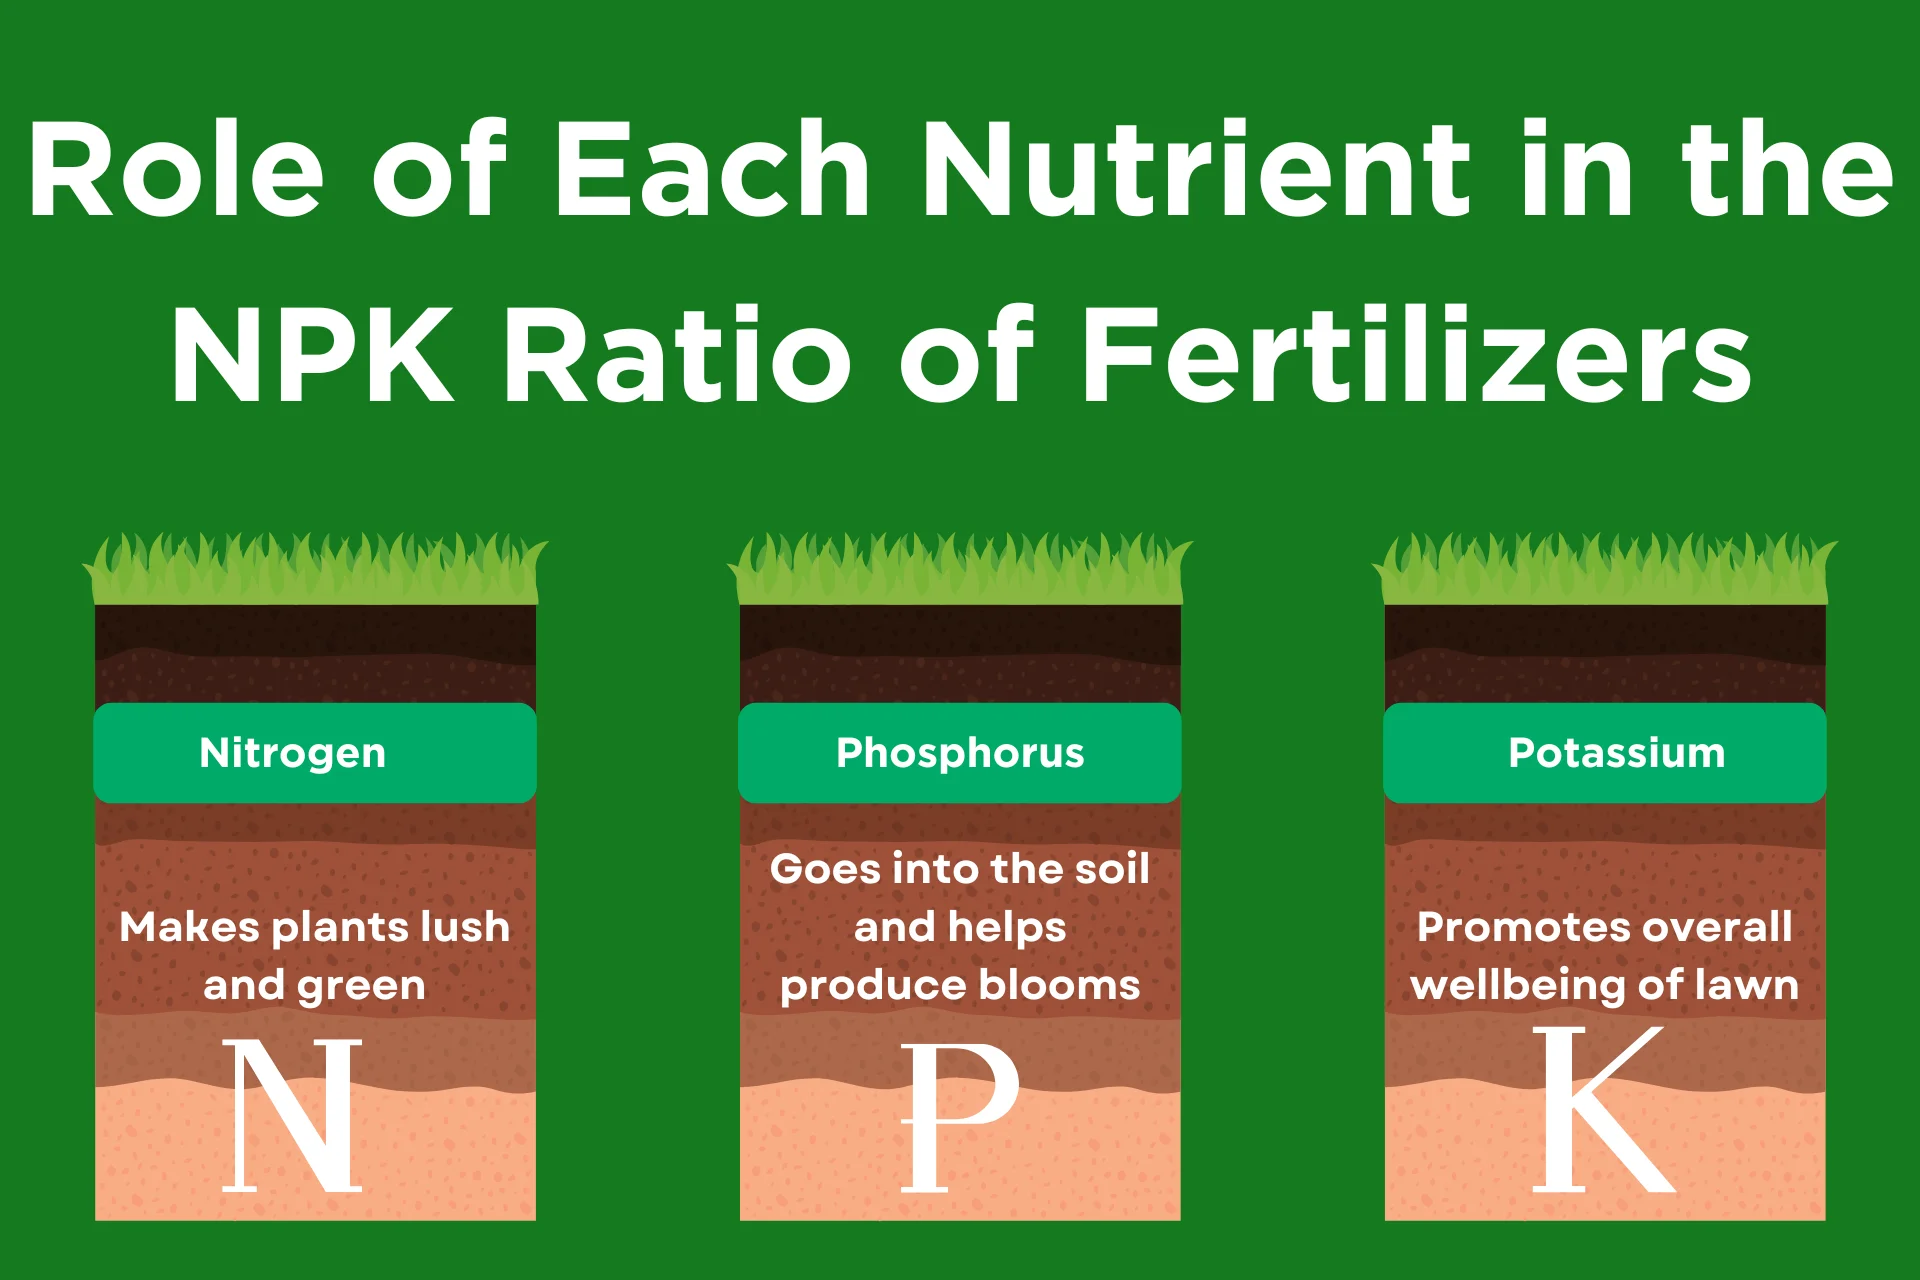 An infographic explaining each letter in the NPK fertilizer ratio